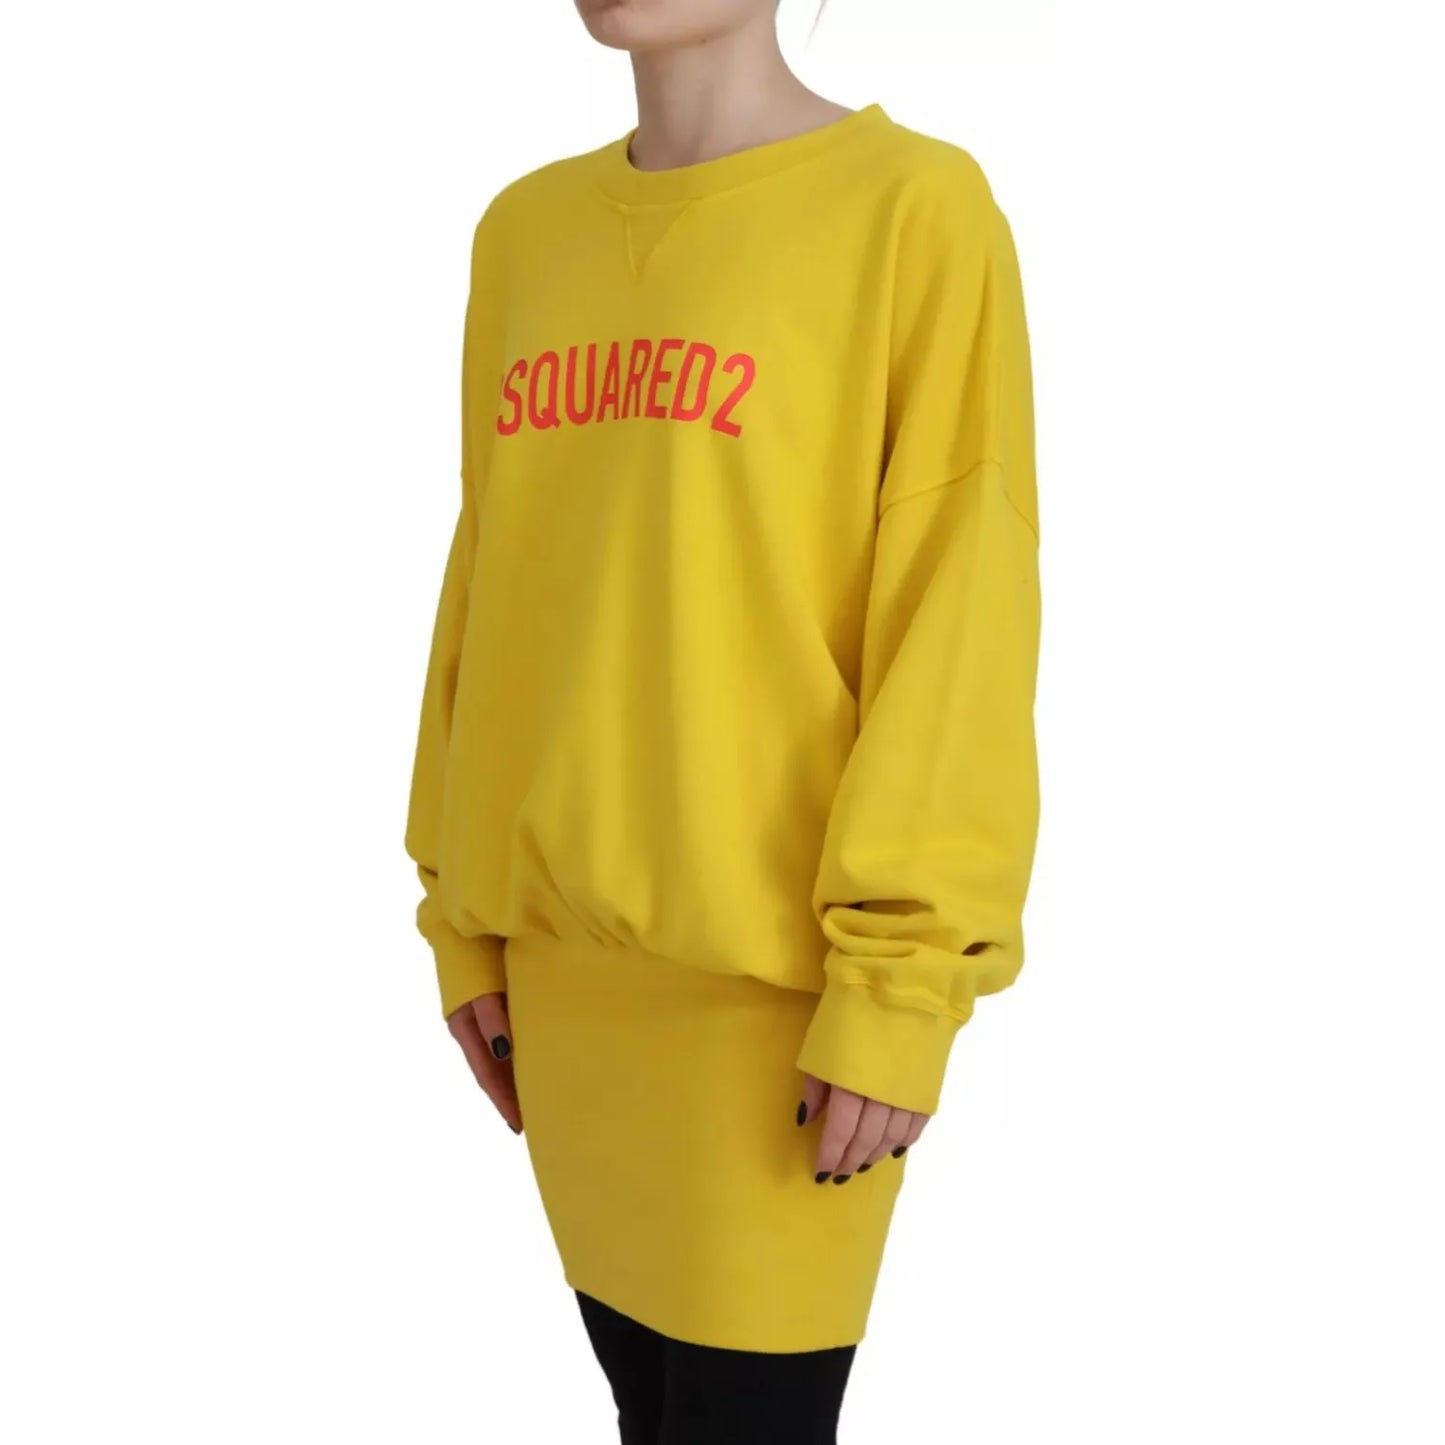 Dsquared² Yellow Logo Print Cotton Crewneck Pullover Sweater yellow-logo-print-cotton-crewneck-pullover-sweater